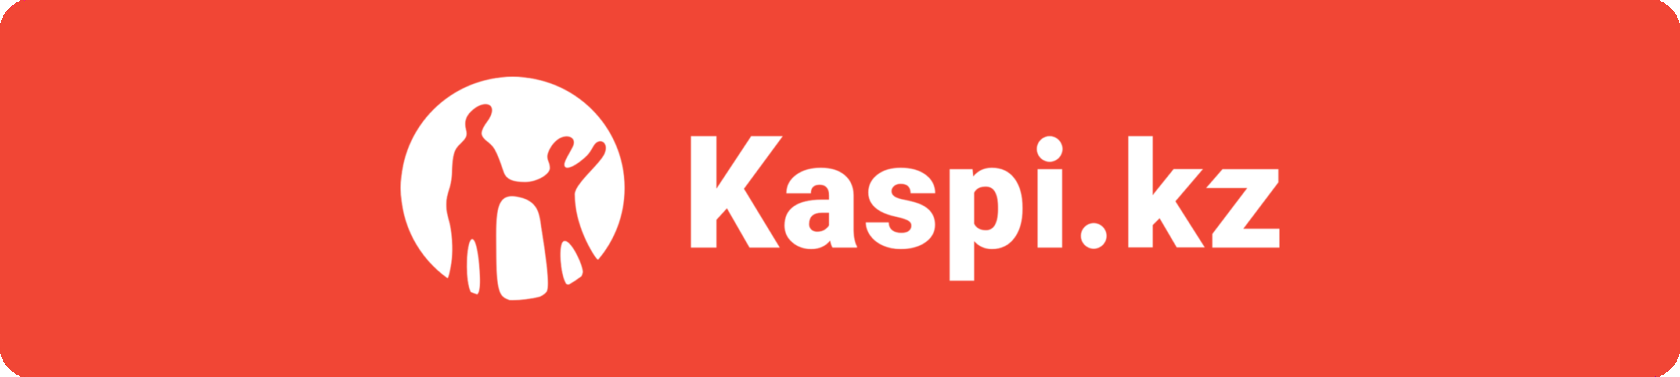 Kaspi kz. Логотип PNG Каспи Маркет.